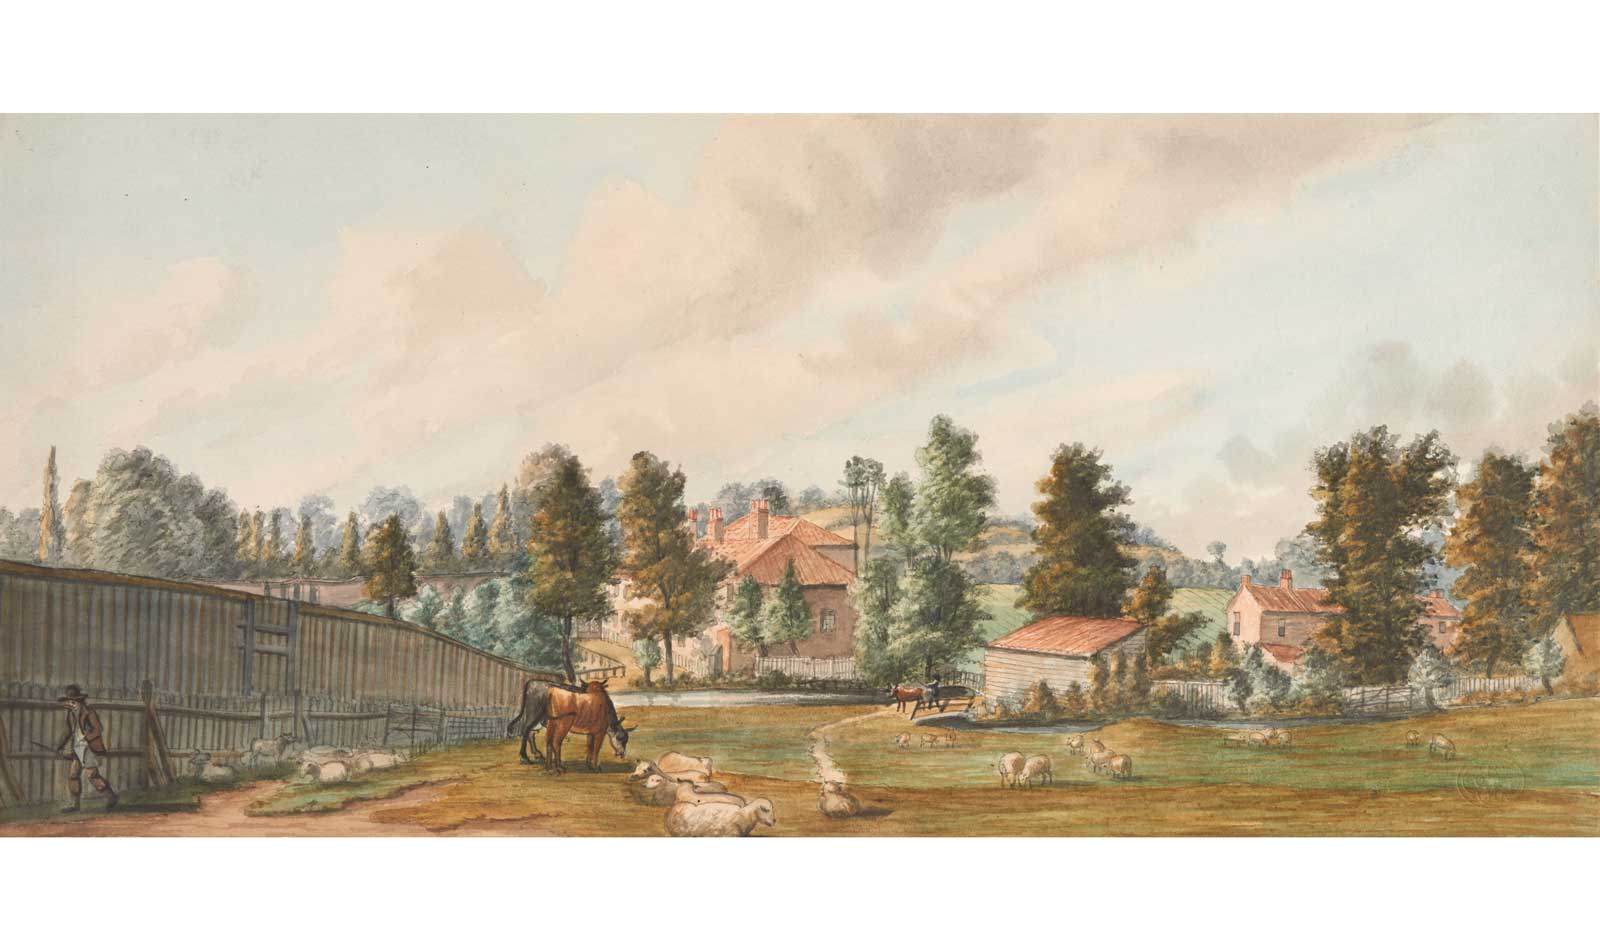 A painting of Jacob's Island, a 19th century London slum.